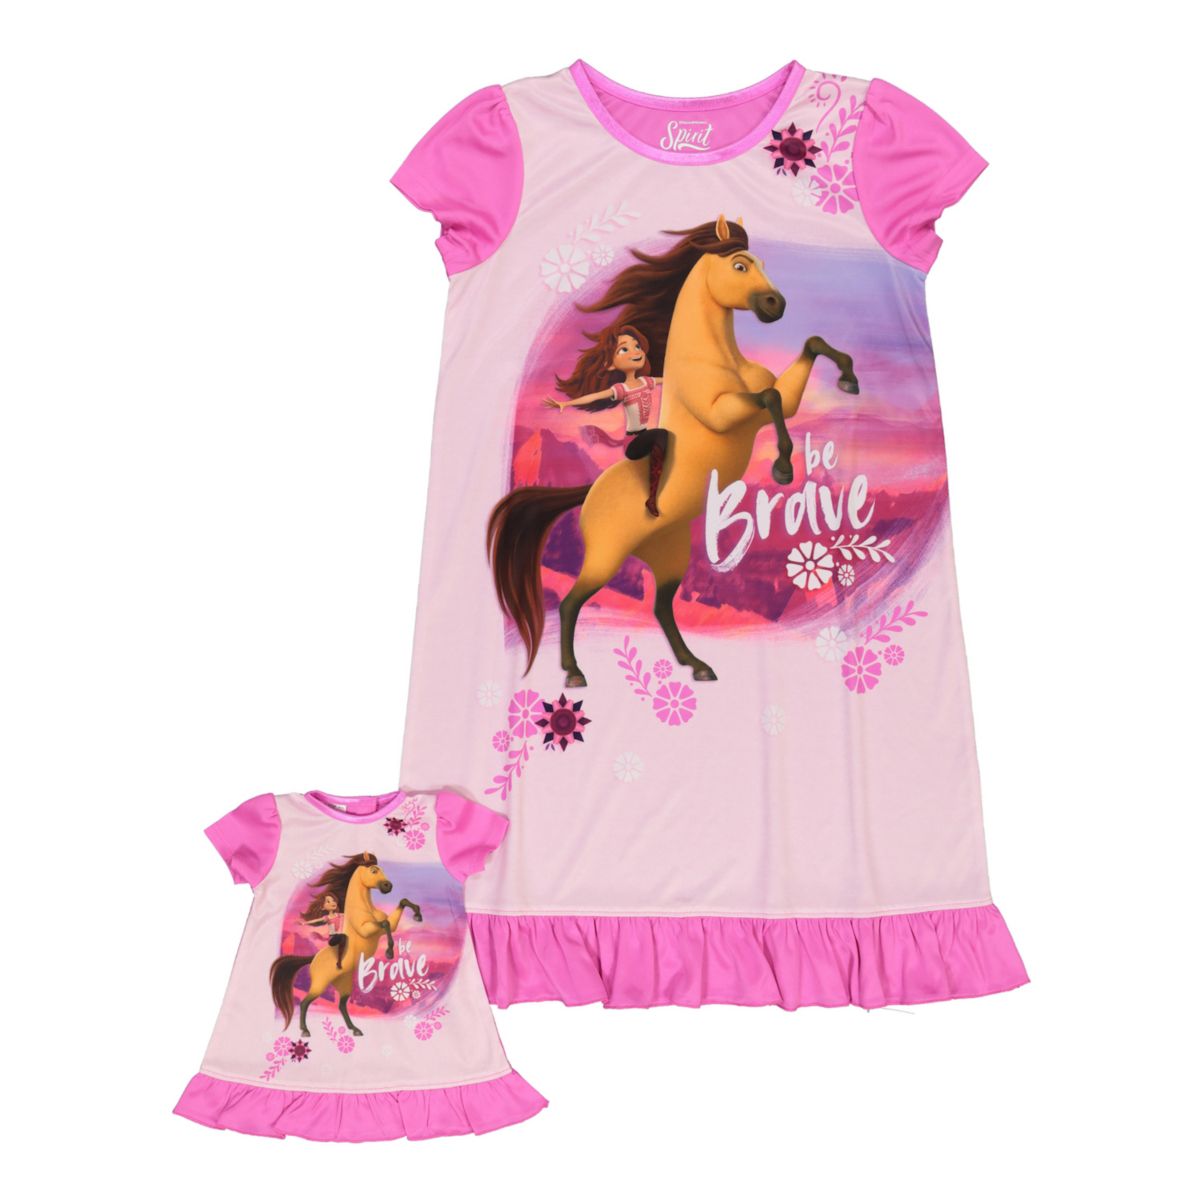 Ночная рубашка Spirit Be Brave и подходящая кукольная ночная рубашка для девочек 6-10 лет Licensed Character